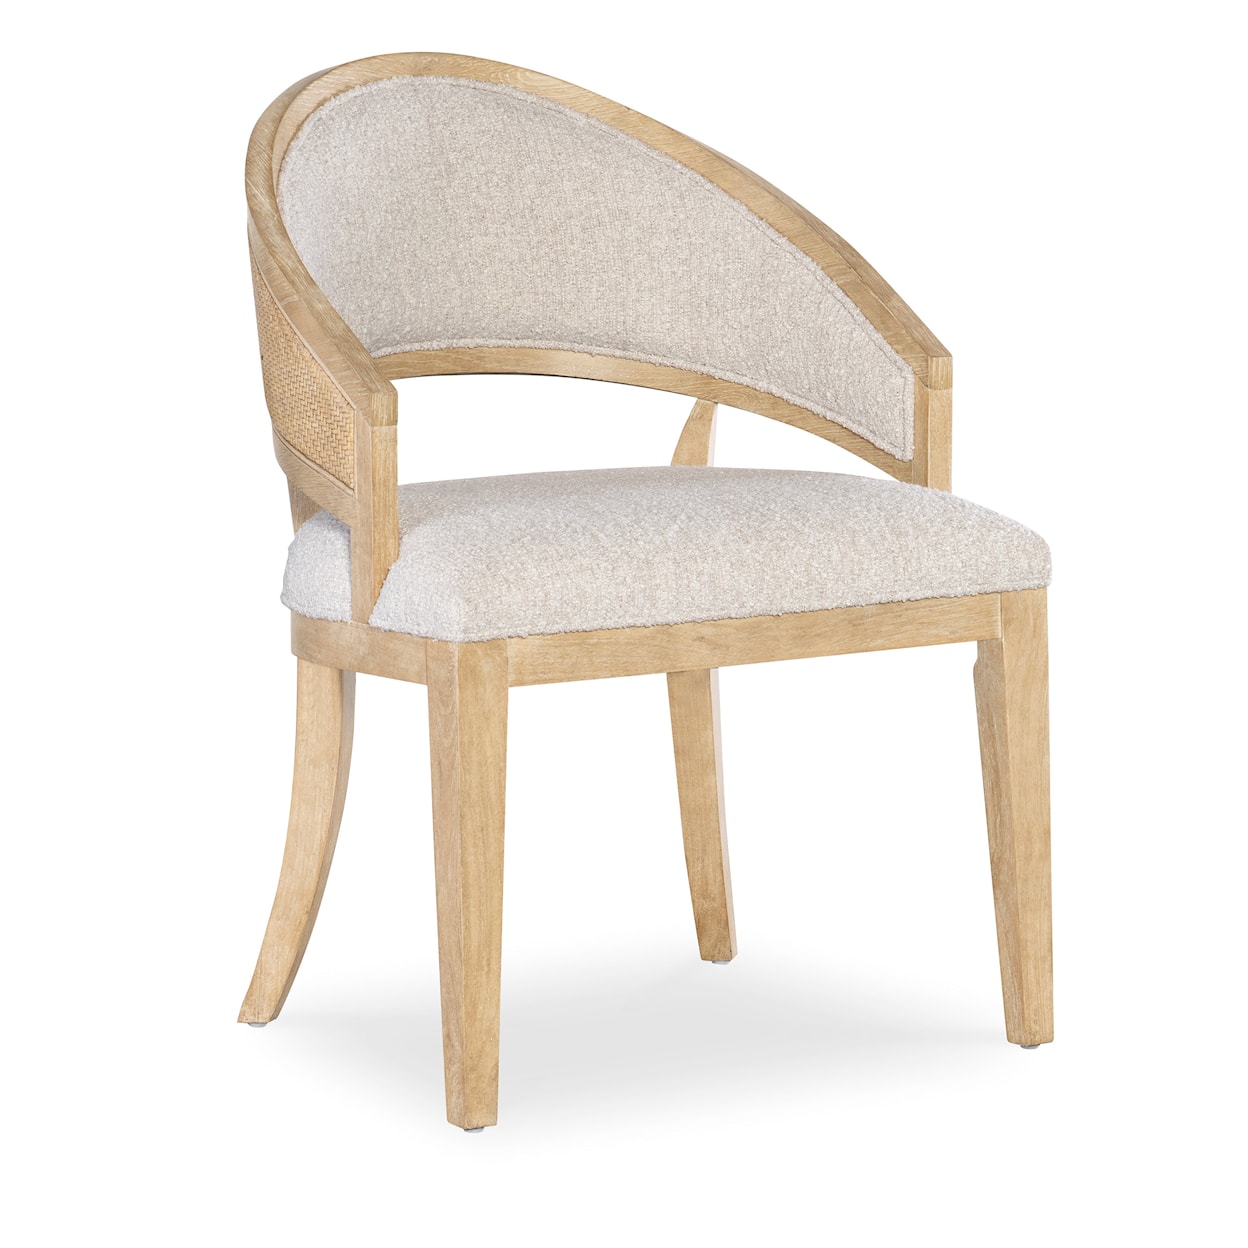 Hooker Furniture Retreat Barrel Back Chair